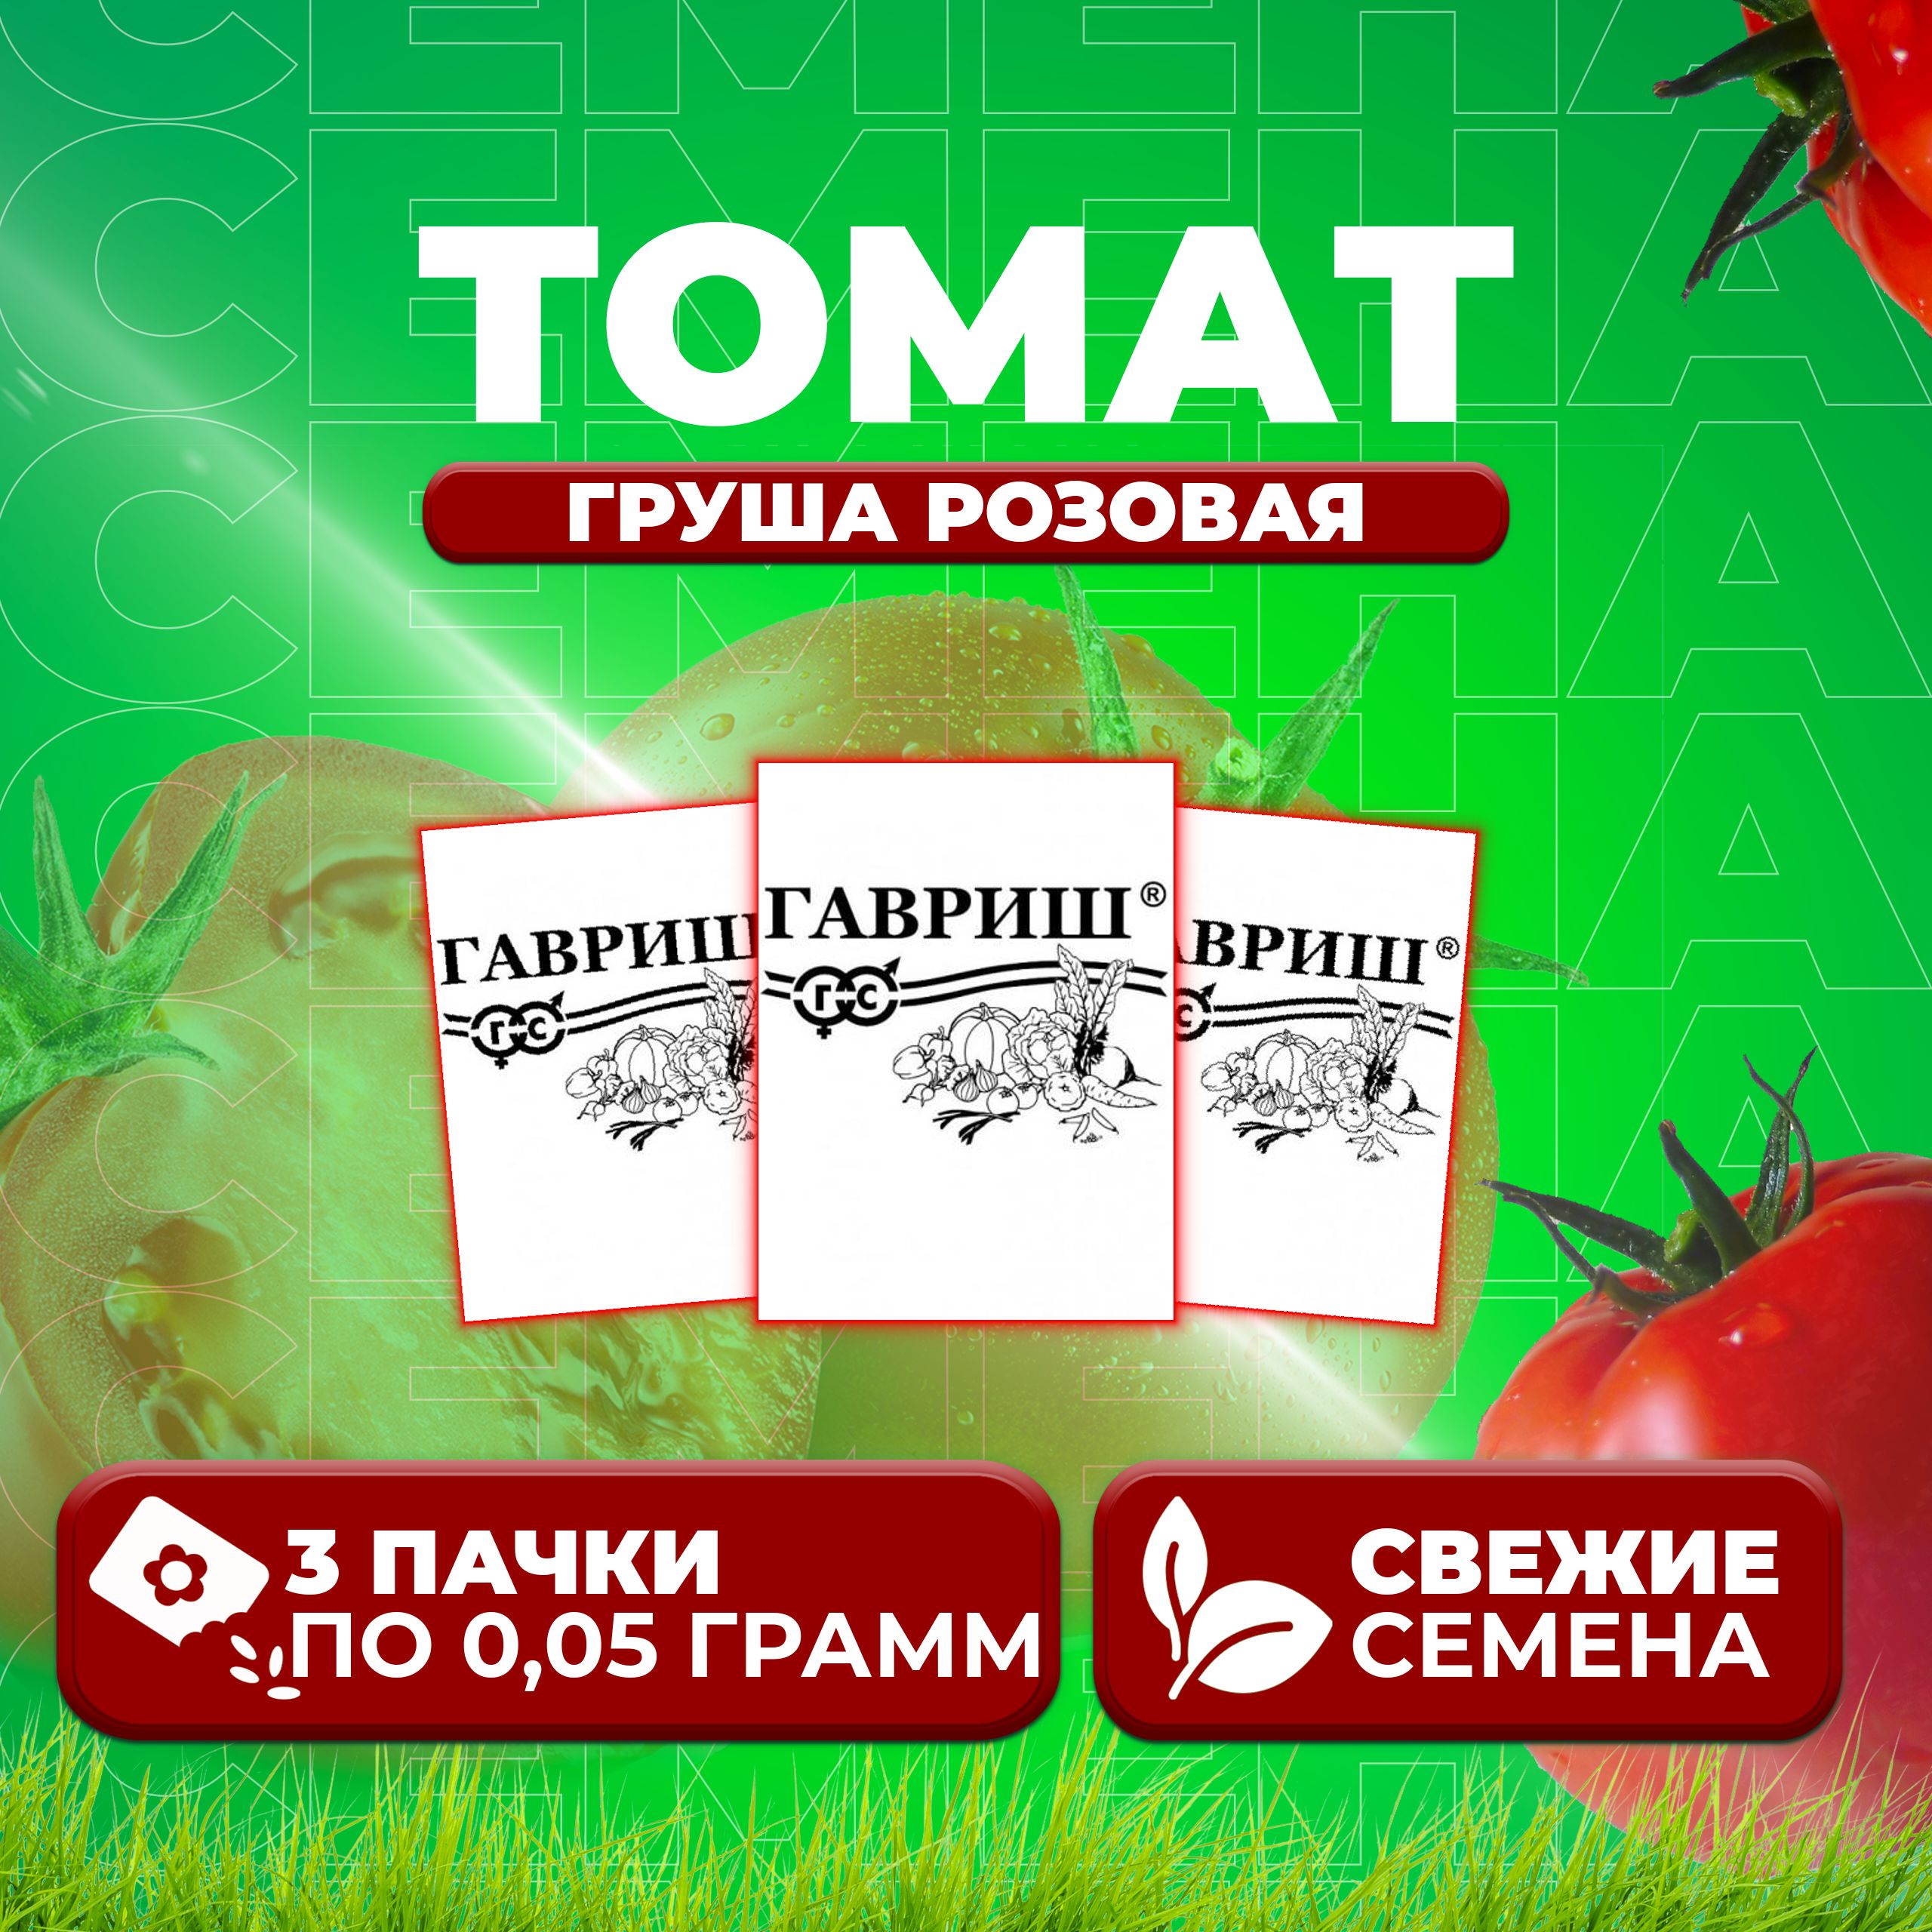 Семена томат Груша розовая Гавриш 1071859798-3 3 уп.